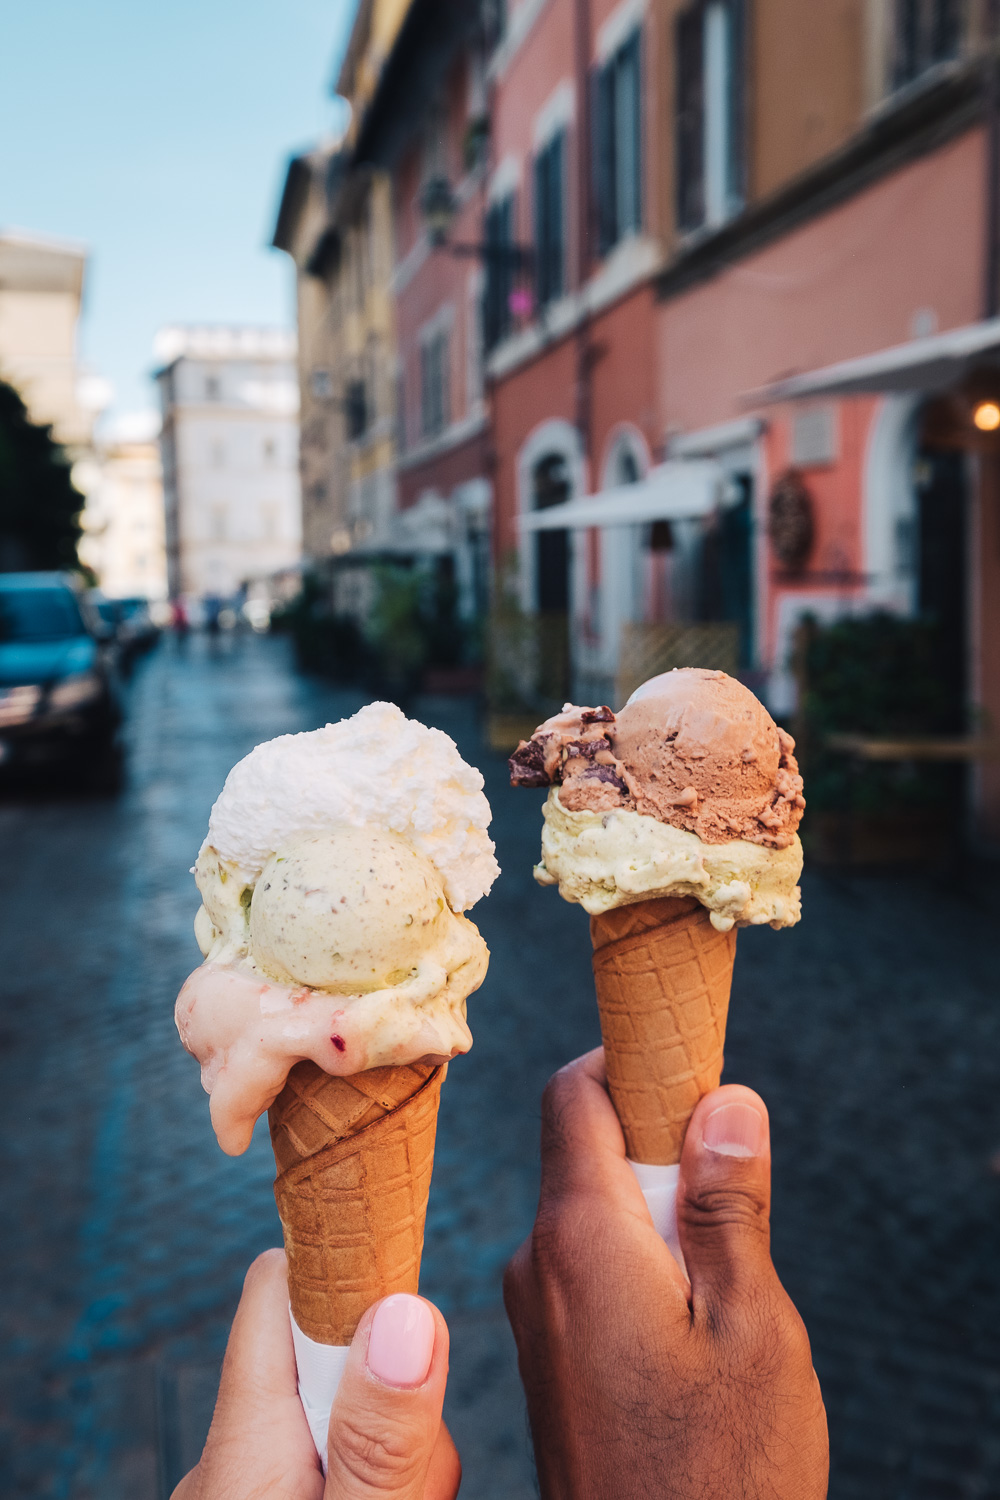 Gelato ice cream at Otaleg in Trastevere, Rome